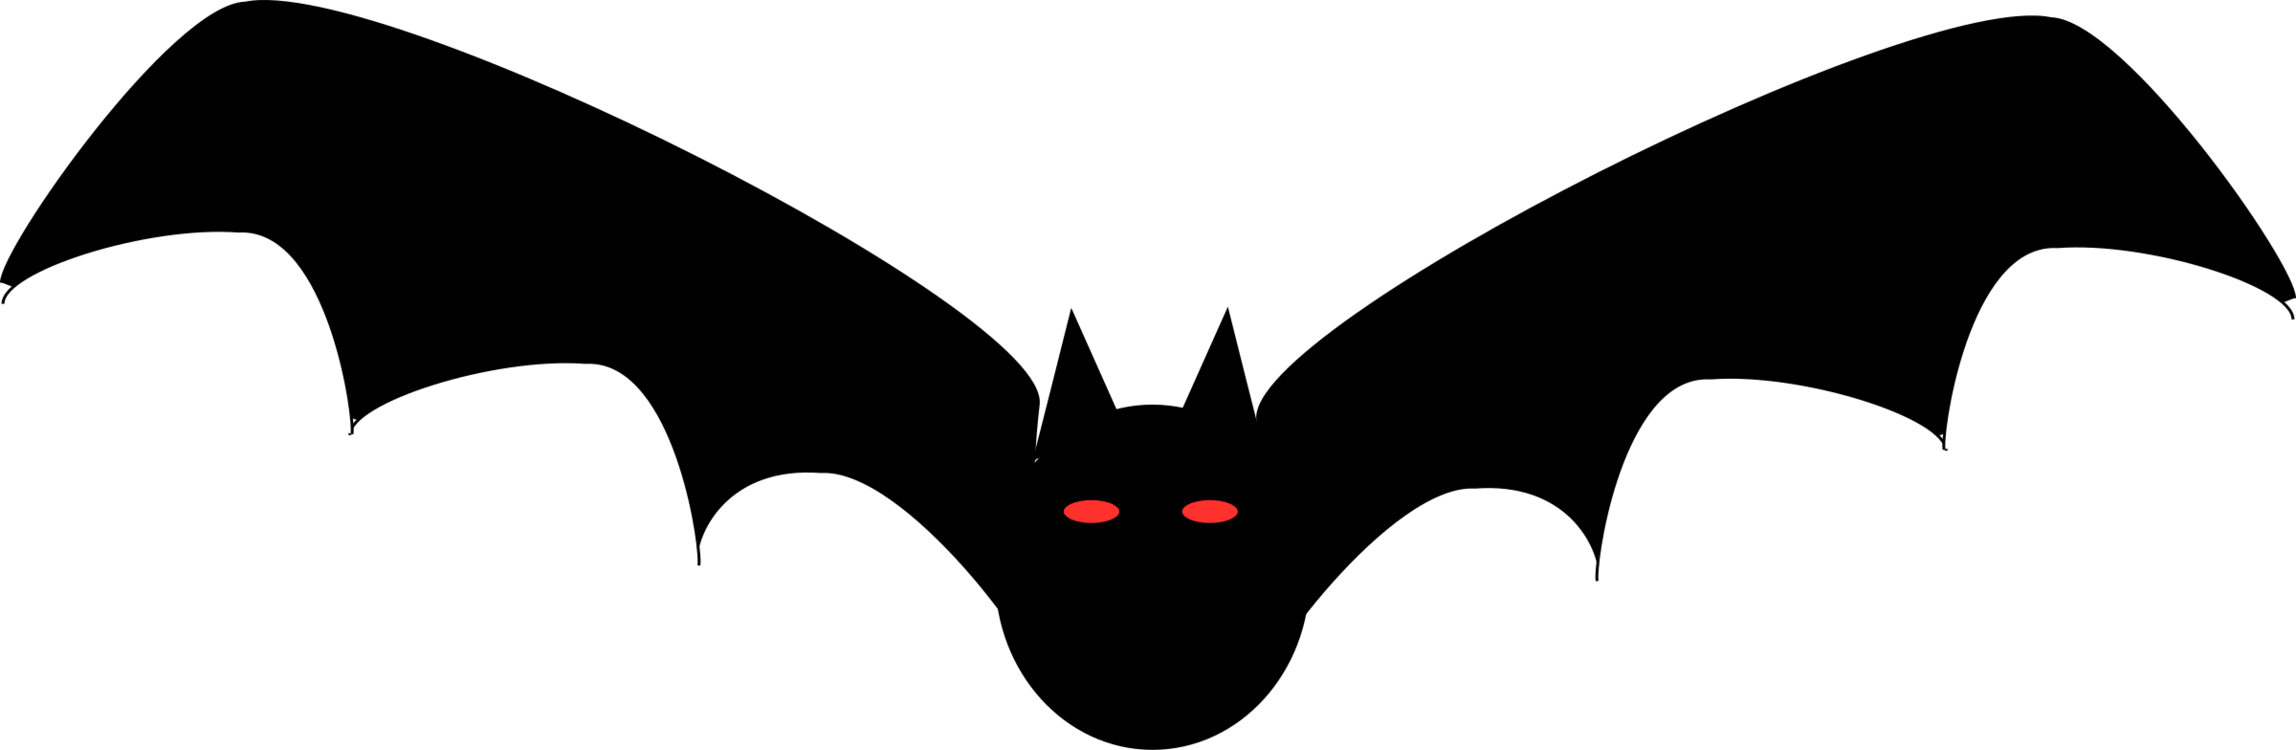 Halloween Bat Black Transparent